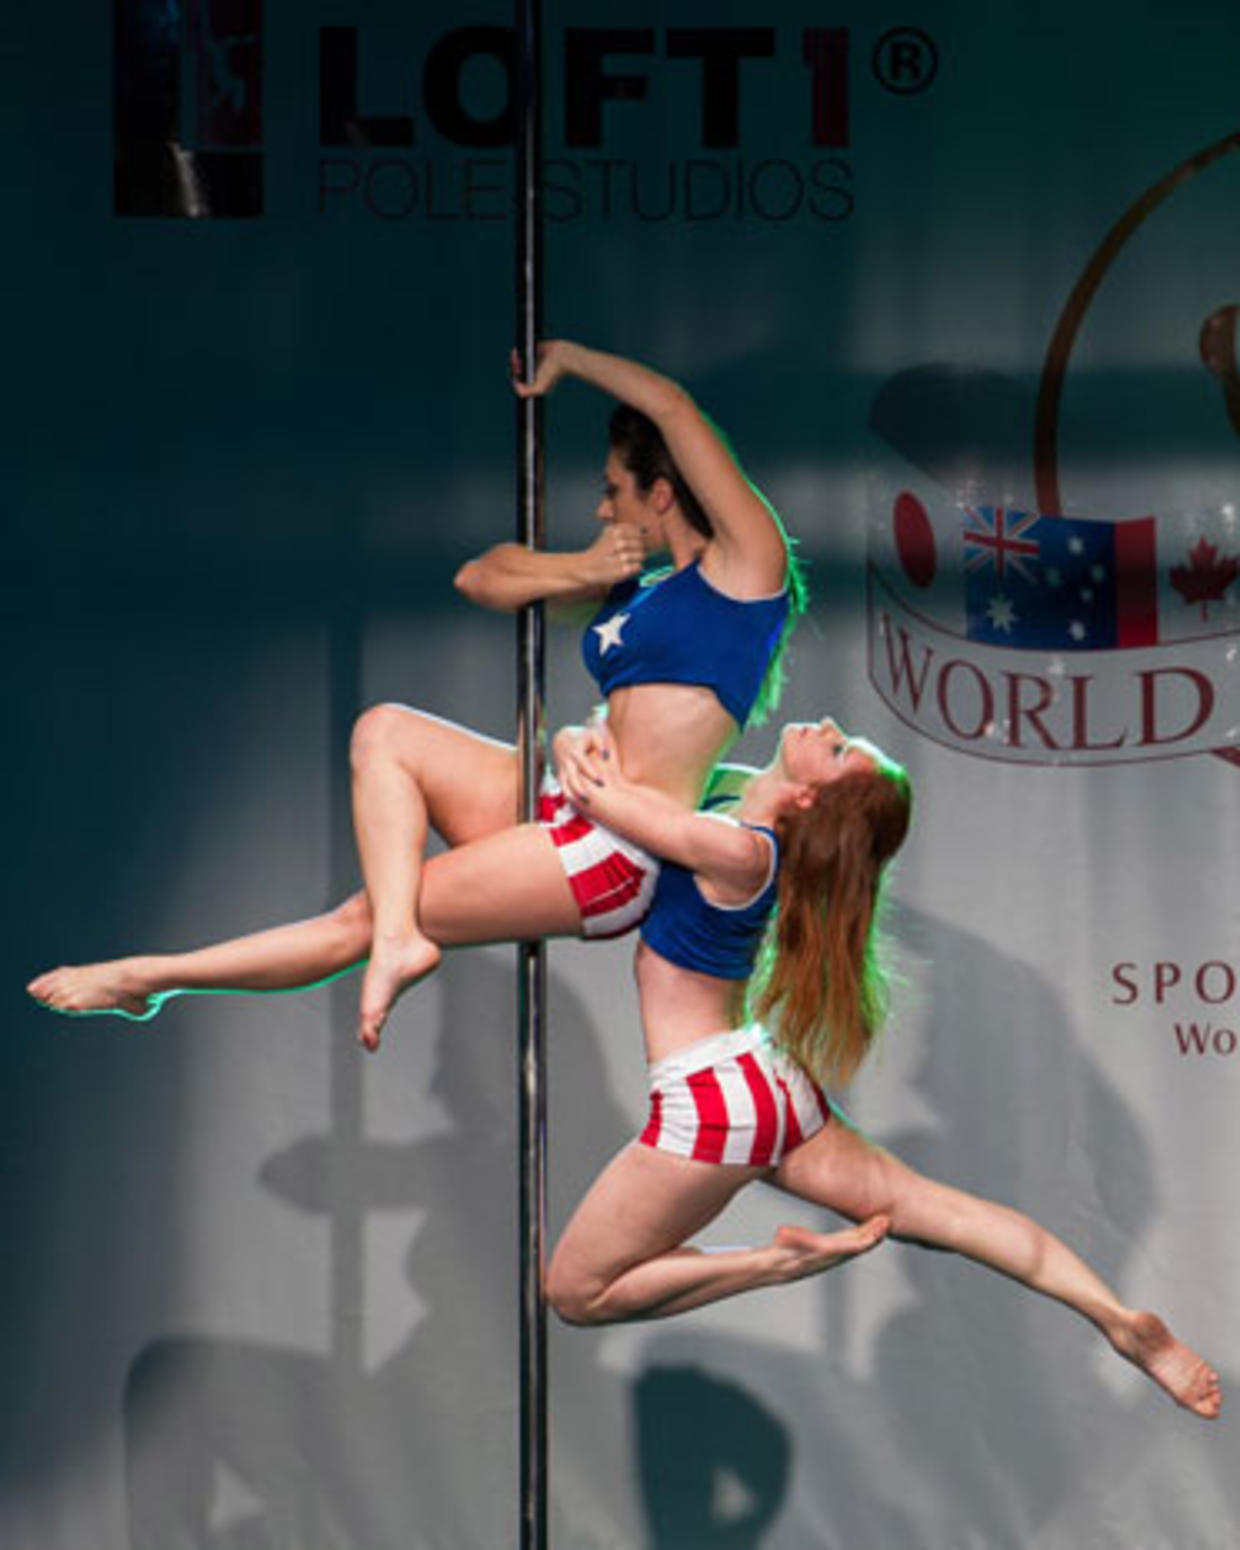 World Pole Dancing Championship CBS News